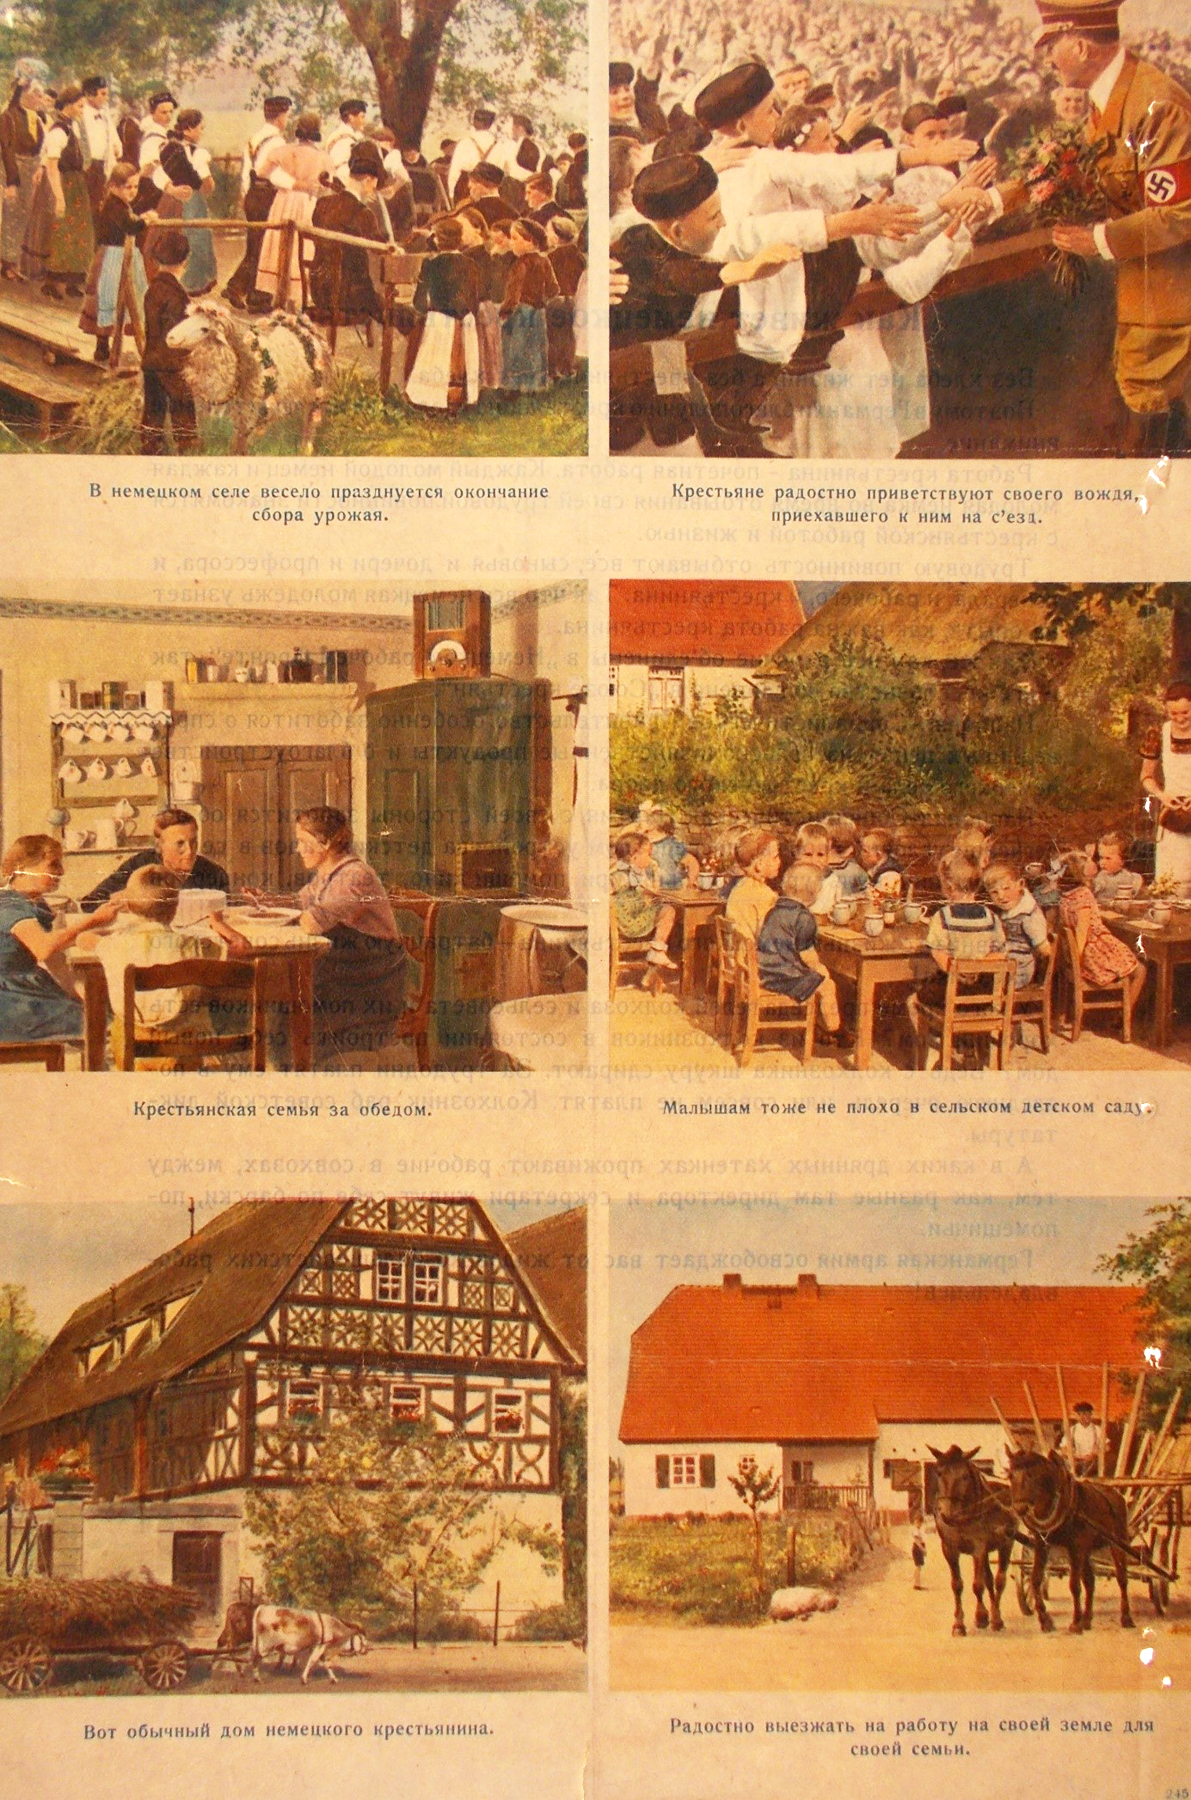 Plakat mit kolorierten Fotos